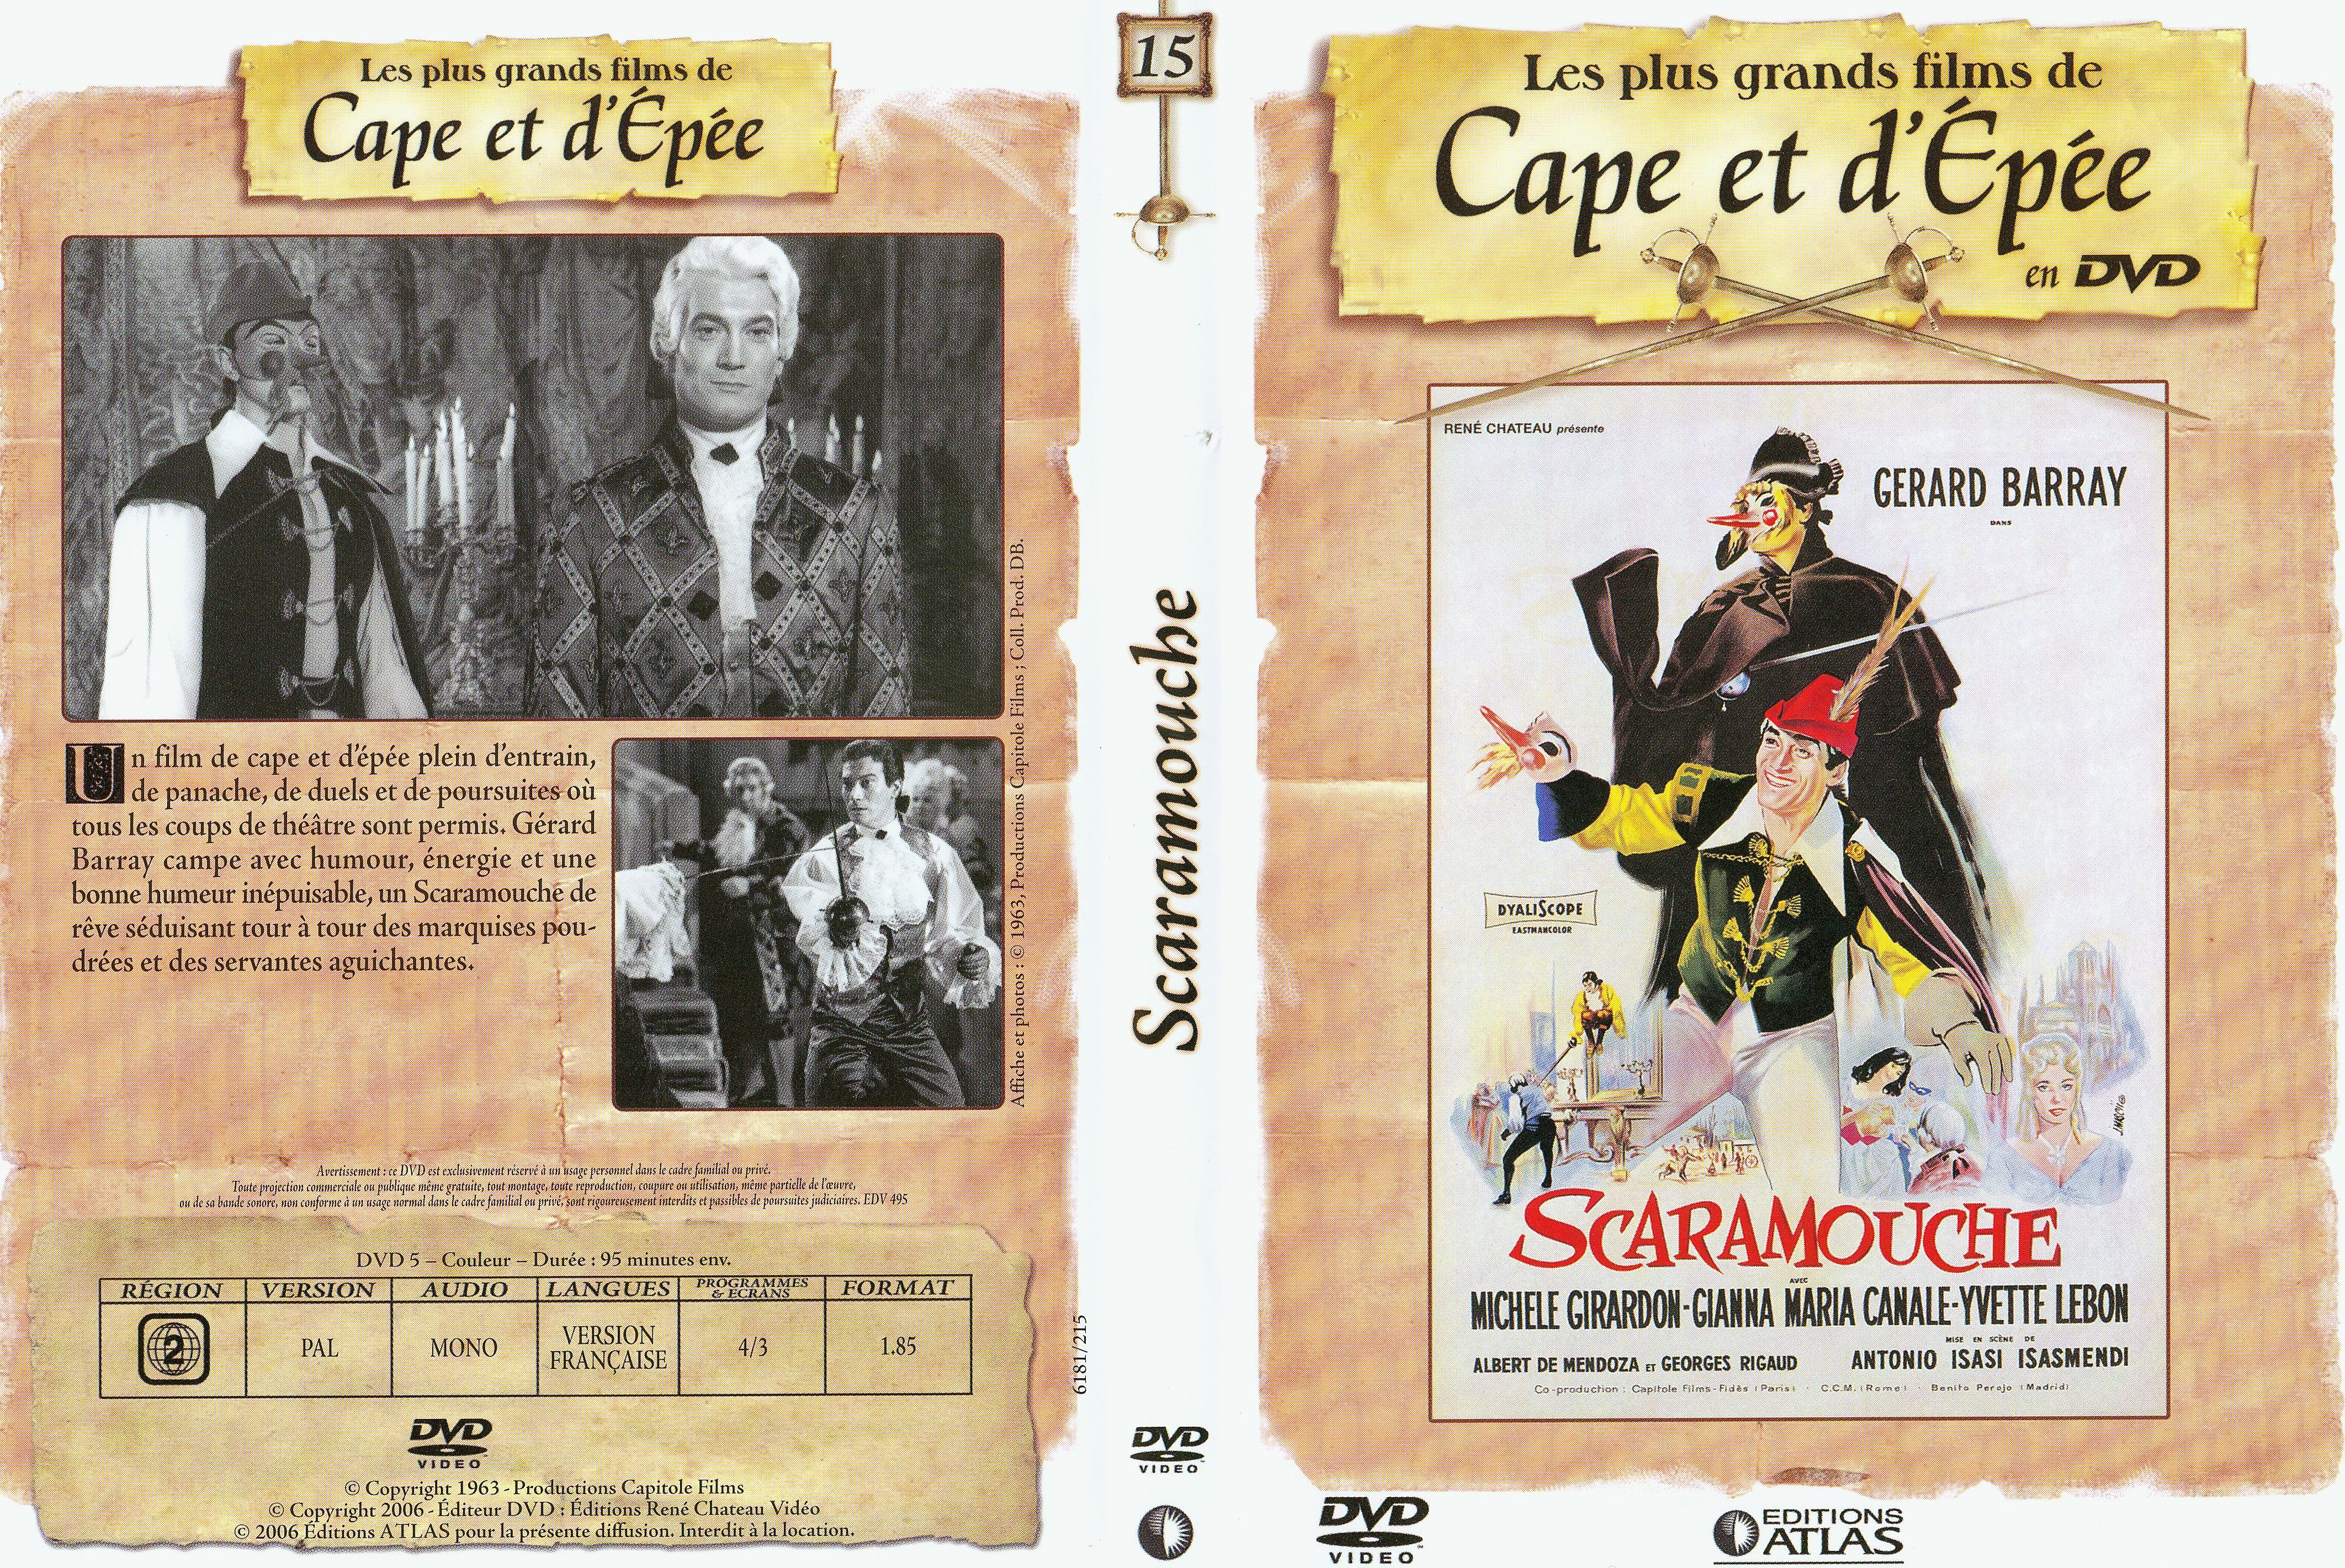 Jaquette DVD Scaramouche (Gerard Barray)